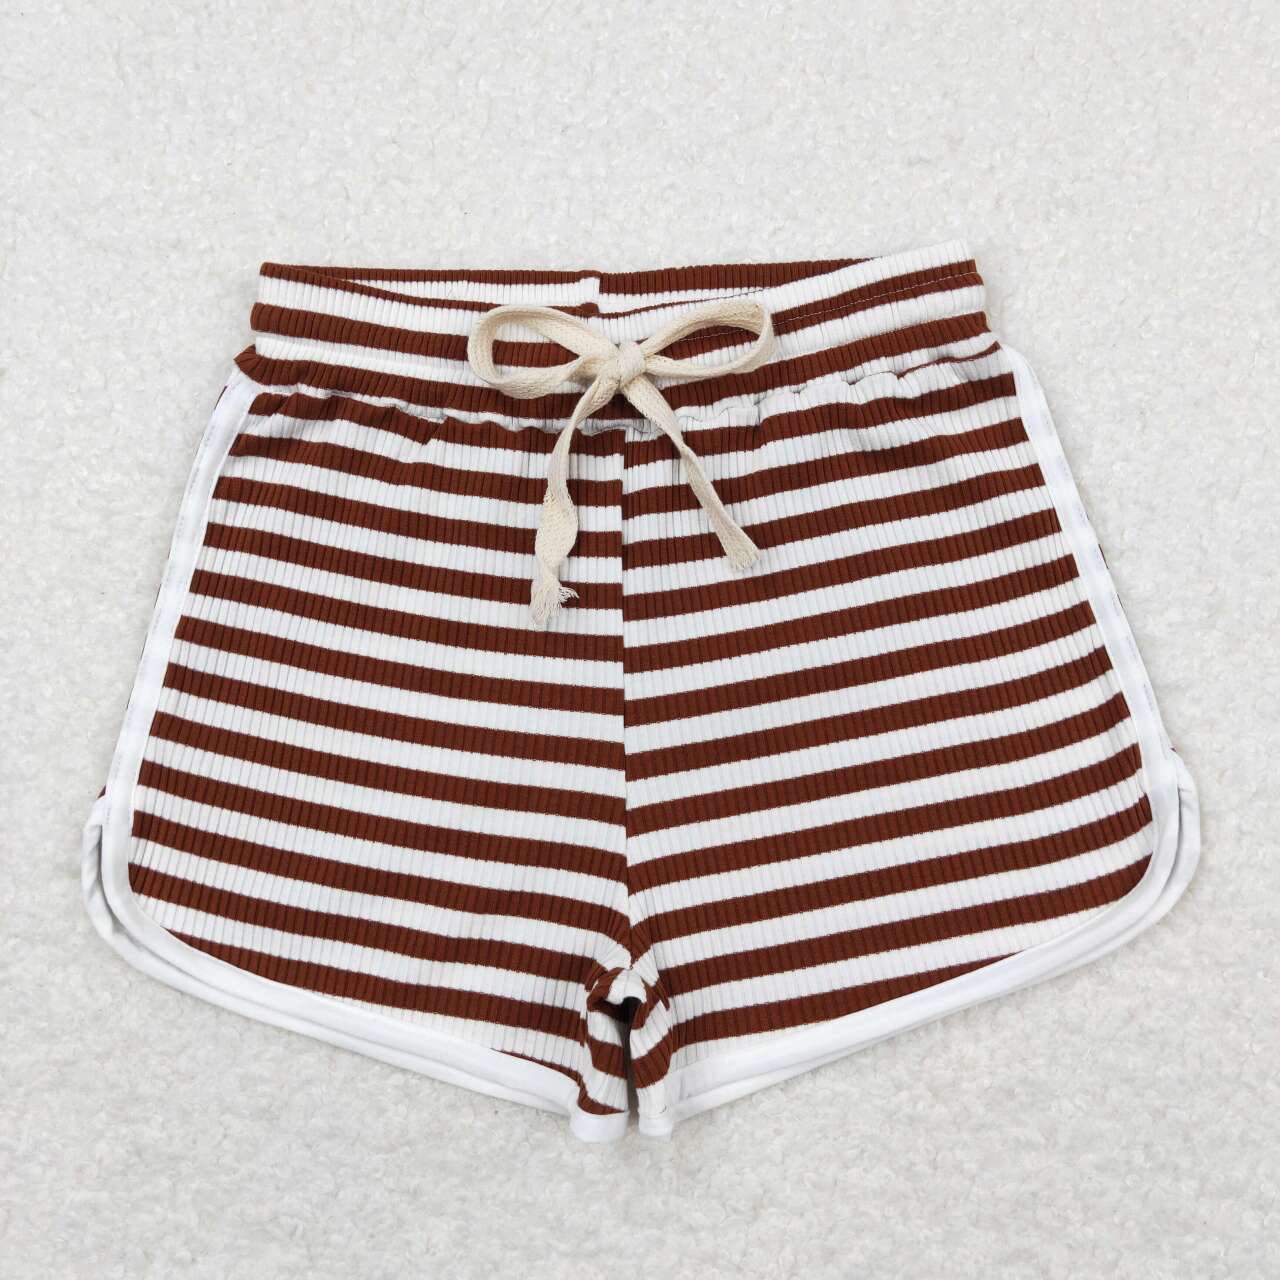 RTS SS0337Burgundy striped white shorts